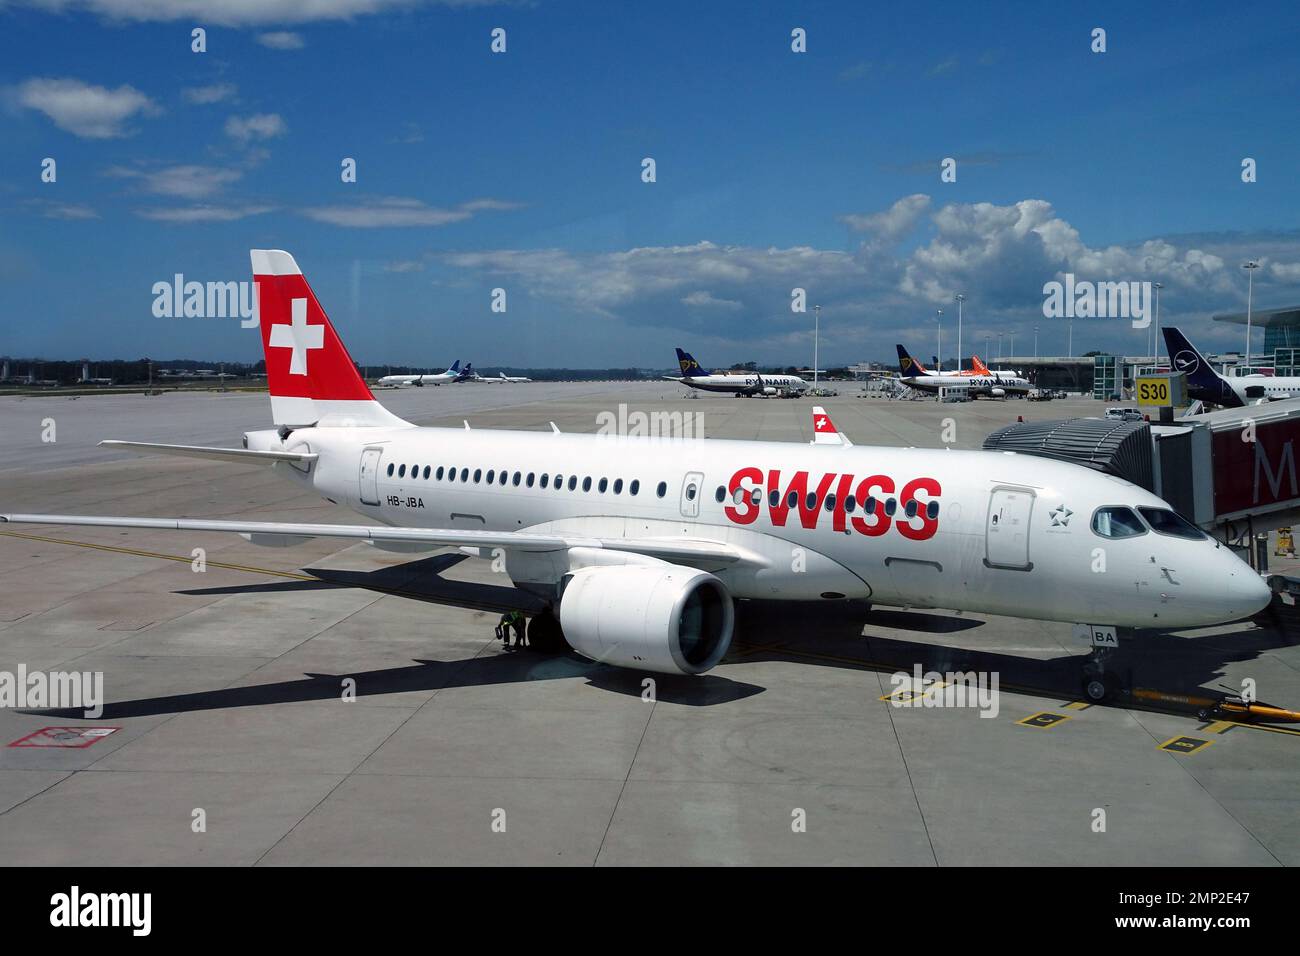 Portugal, Oporto:  HB-JBA    Bombardier CS-100            (c/n 50010)  of Swiss. Stock Photo